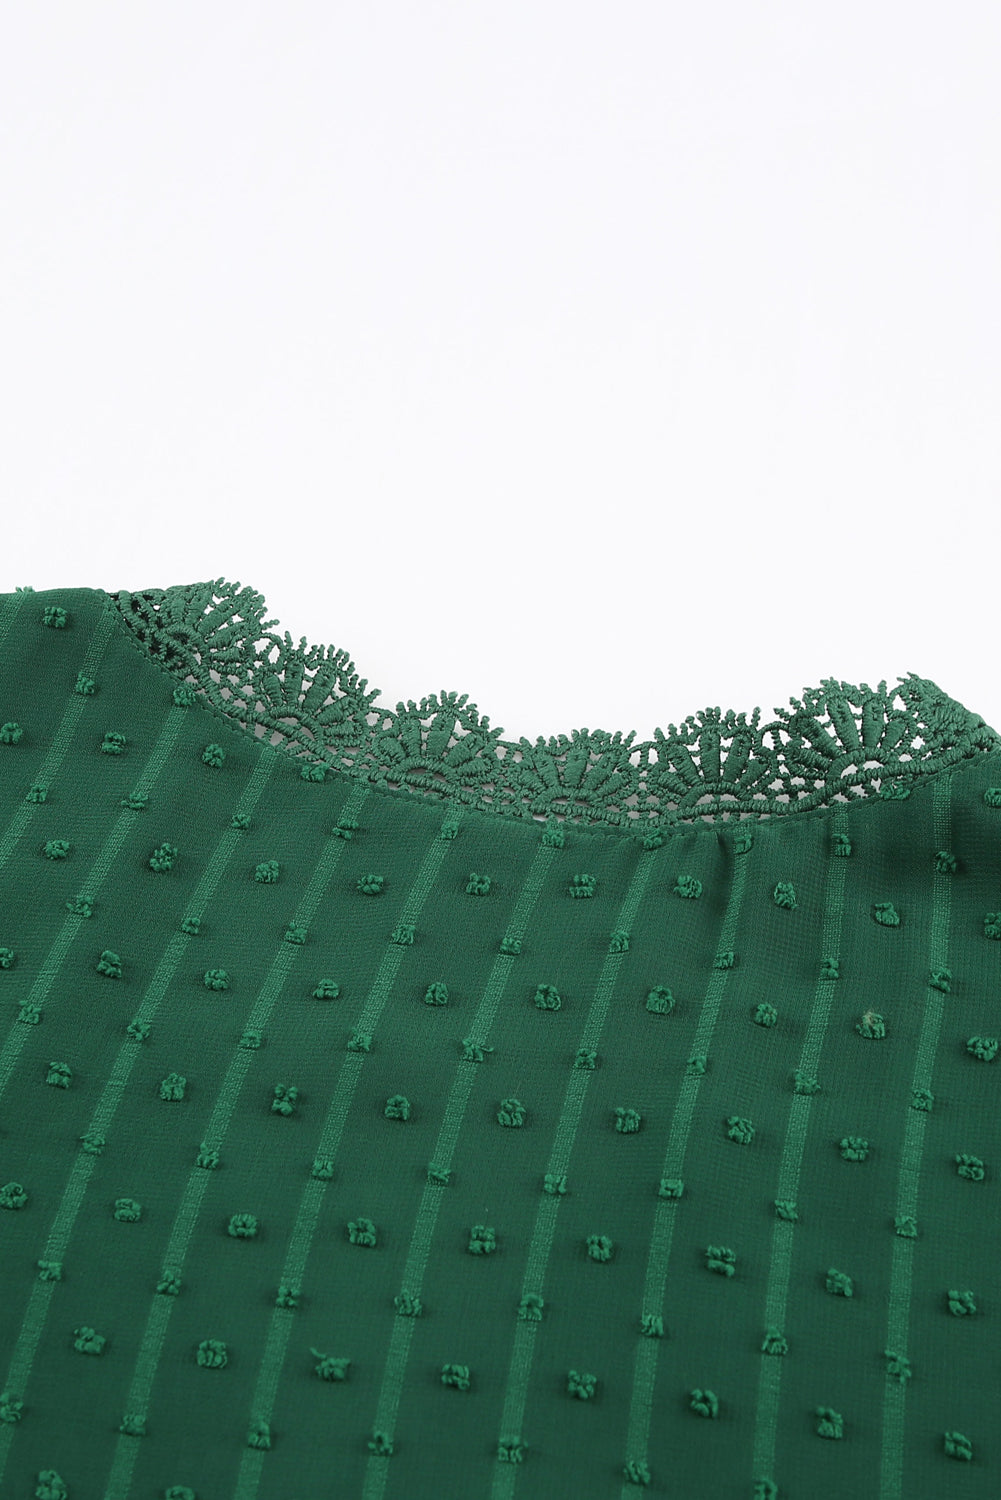 Green Lace Splicing V-Neck Swiss Dot Short Sleeve Top